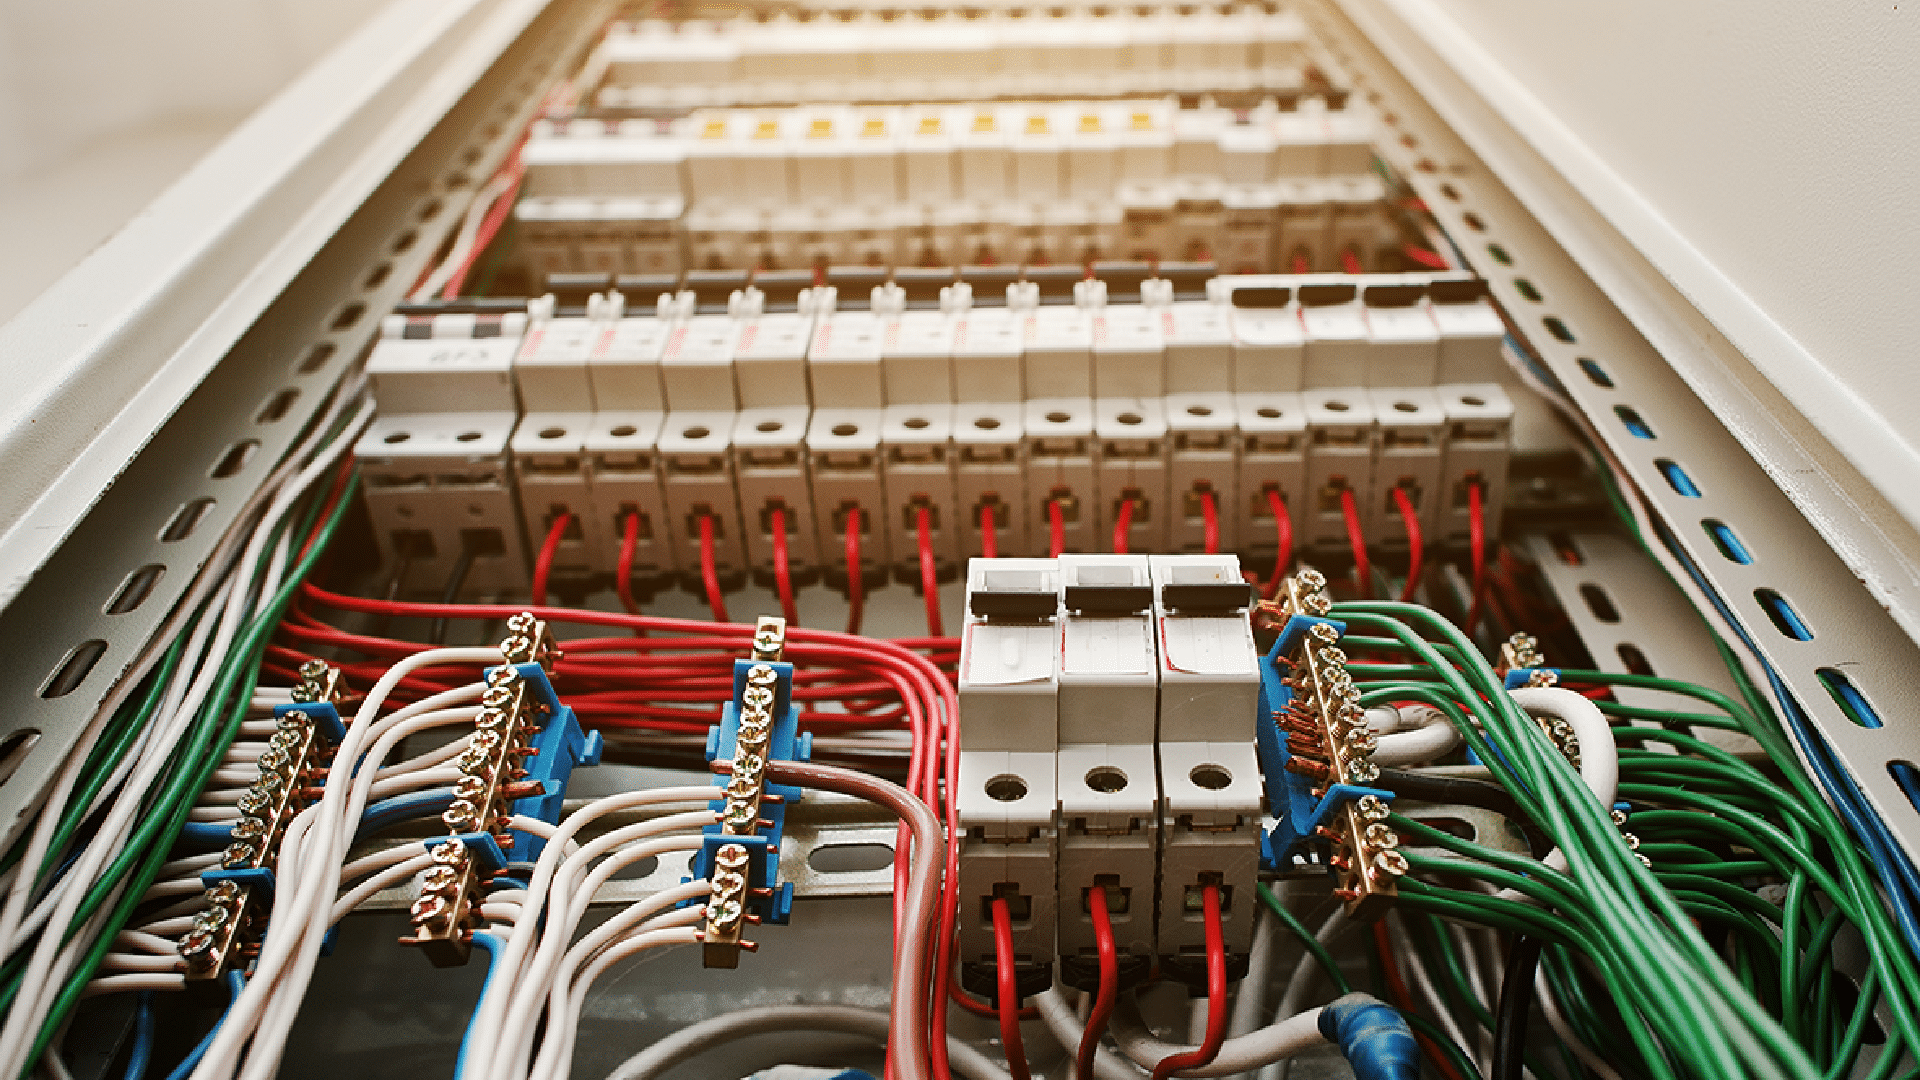 wires inside a machine